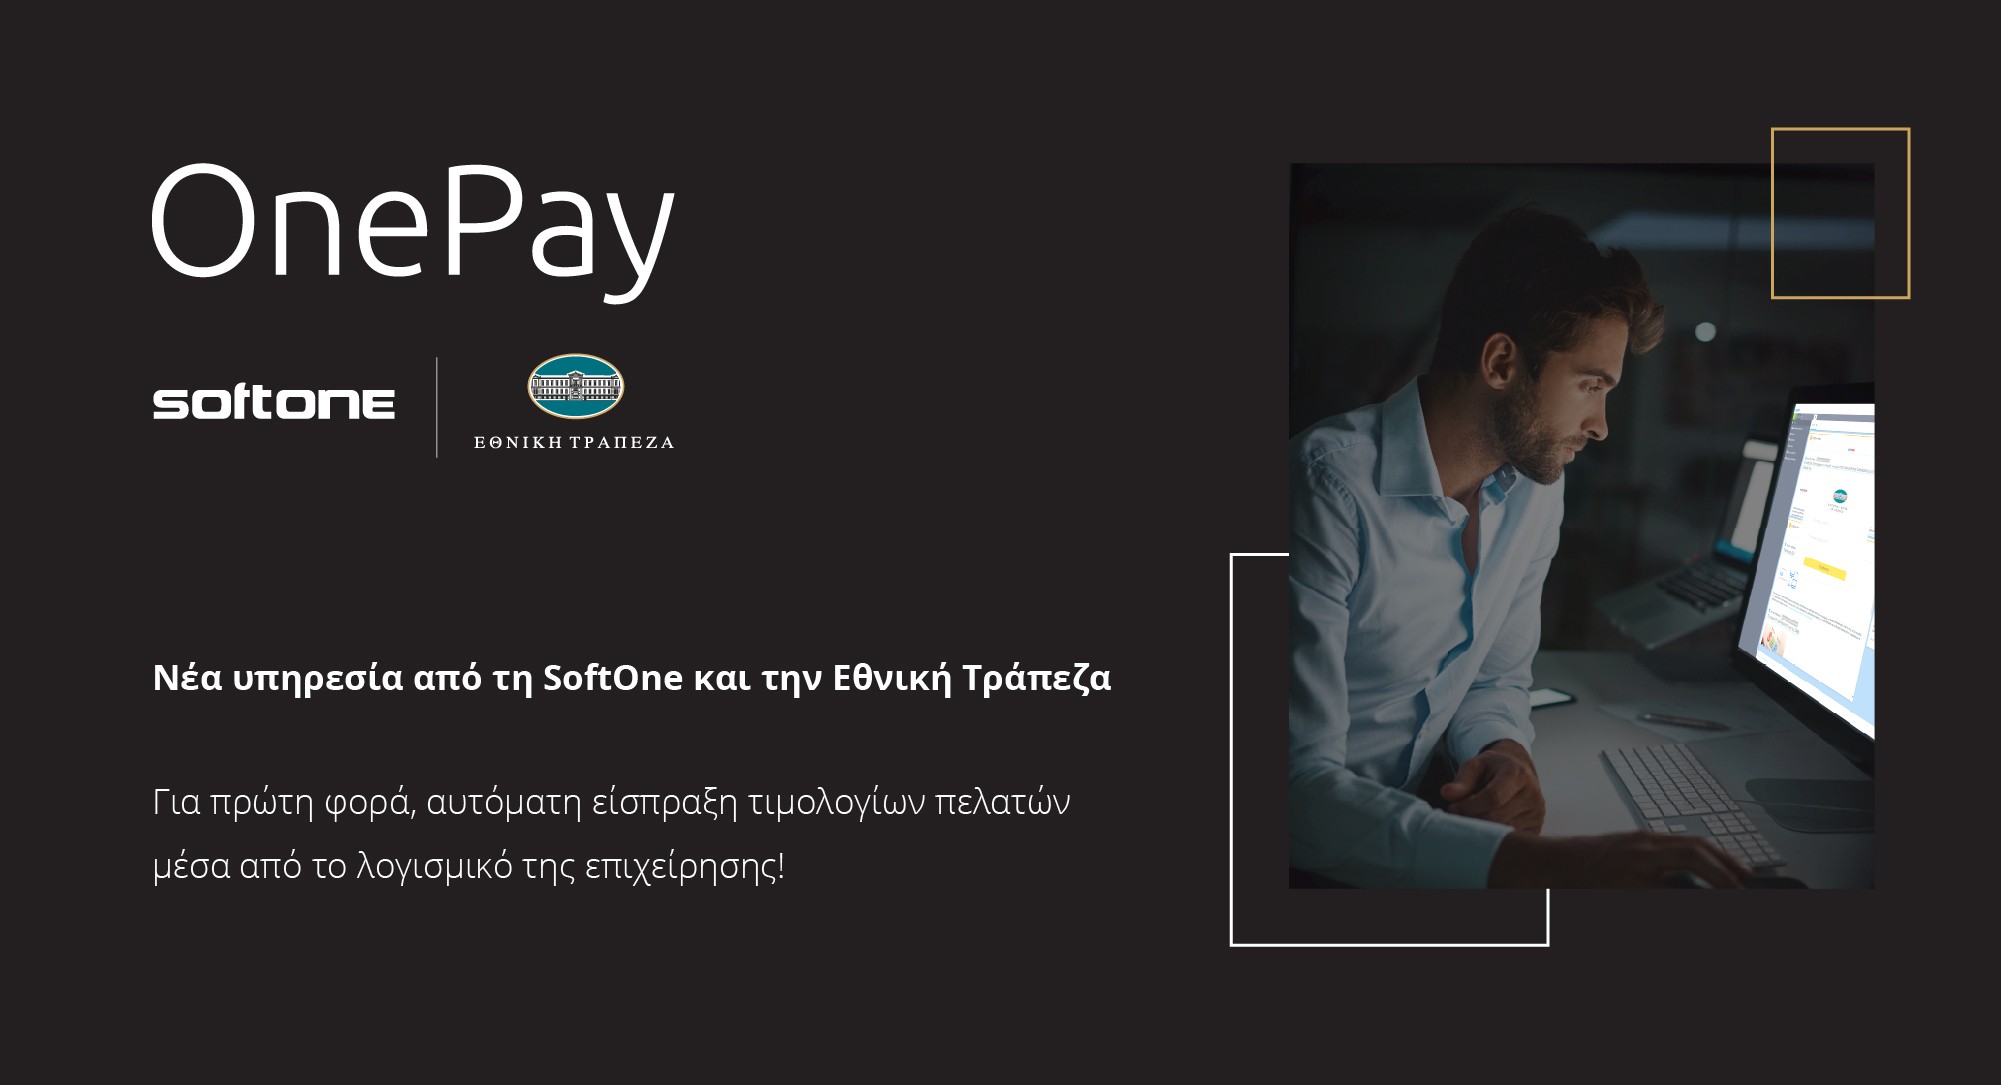 OnePay: Νέα υπηρεσία αυτοματοποίησης είσπραξης απαιτήσεων από την Εθνική Τράπεζα και τη SoftOne